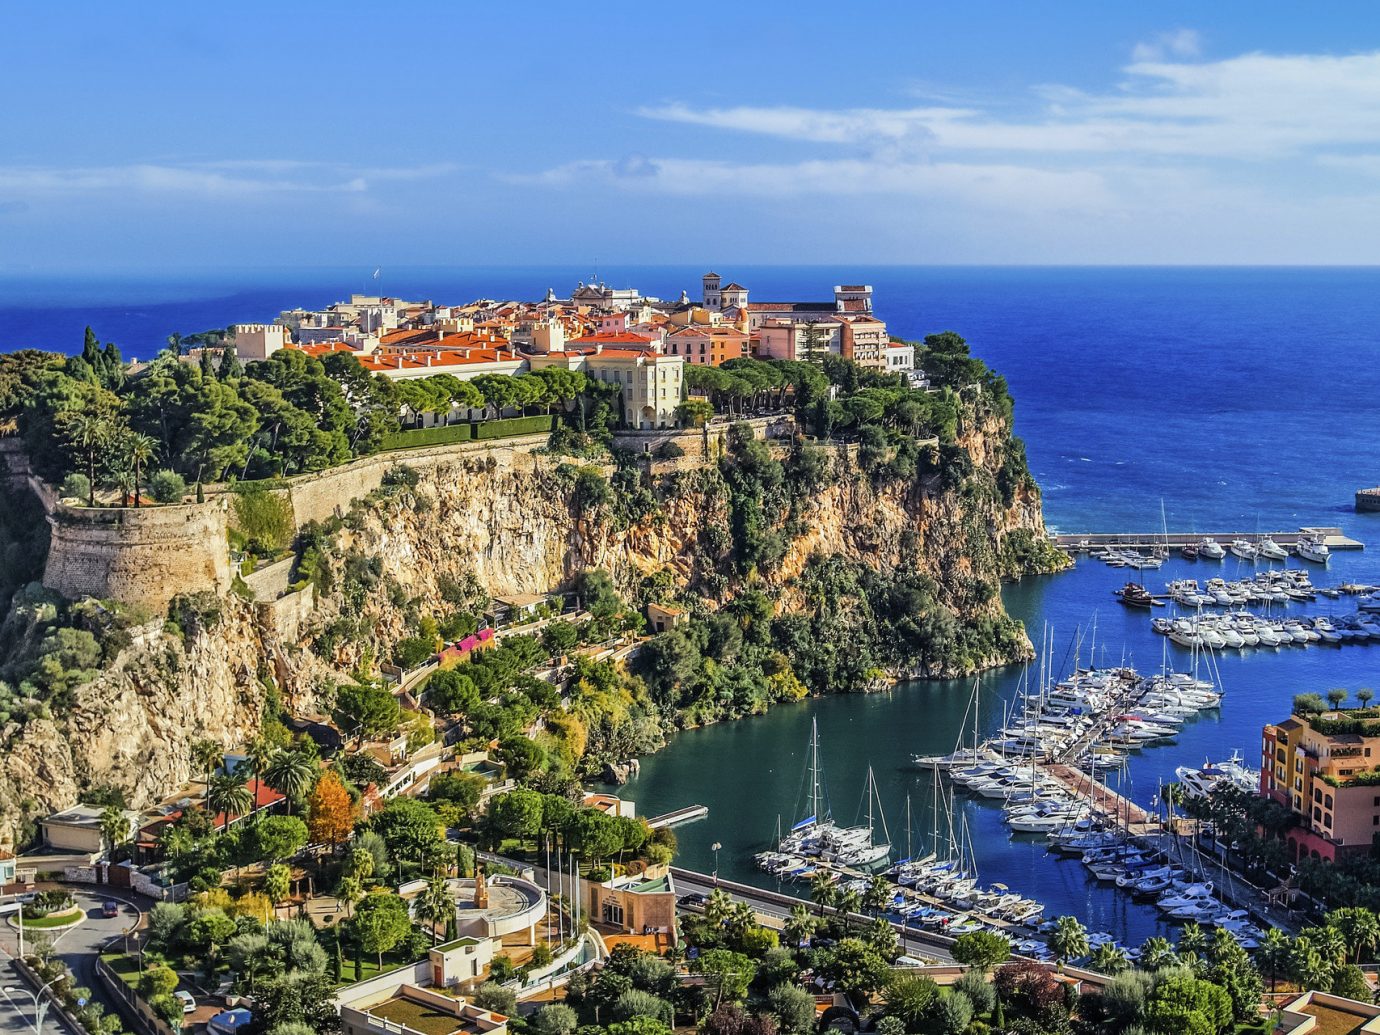 Monaco in Southern France